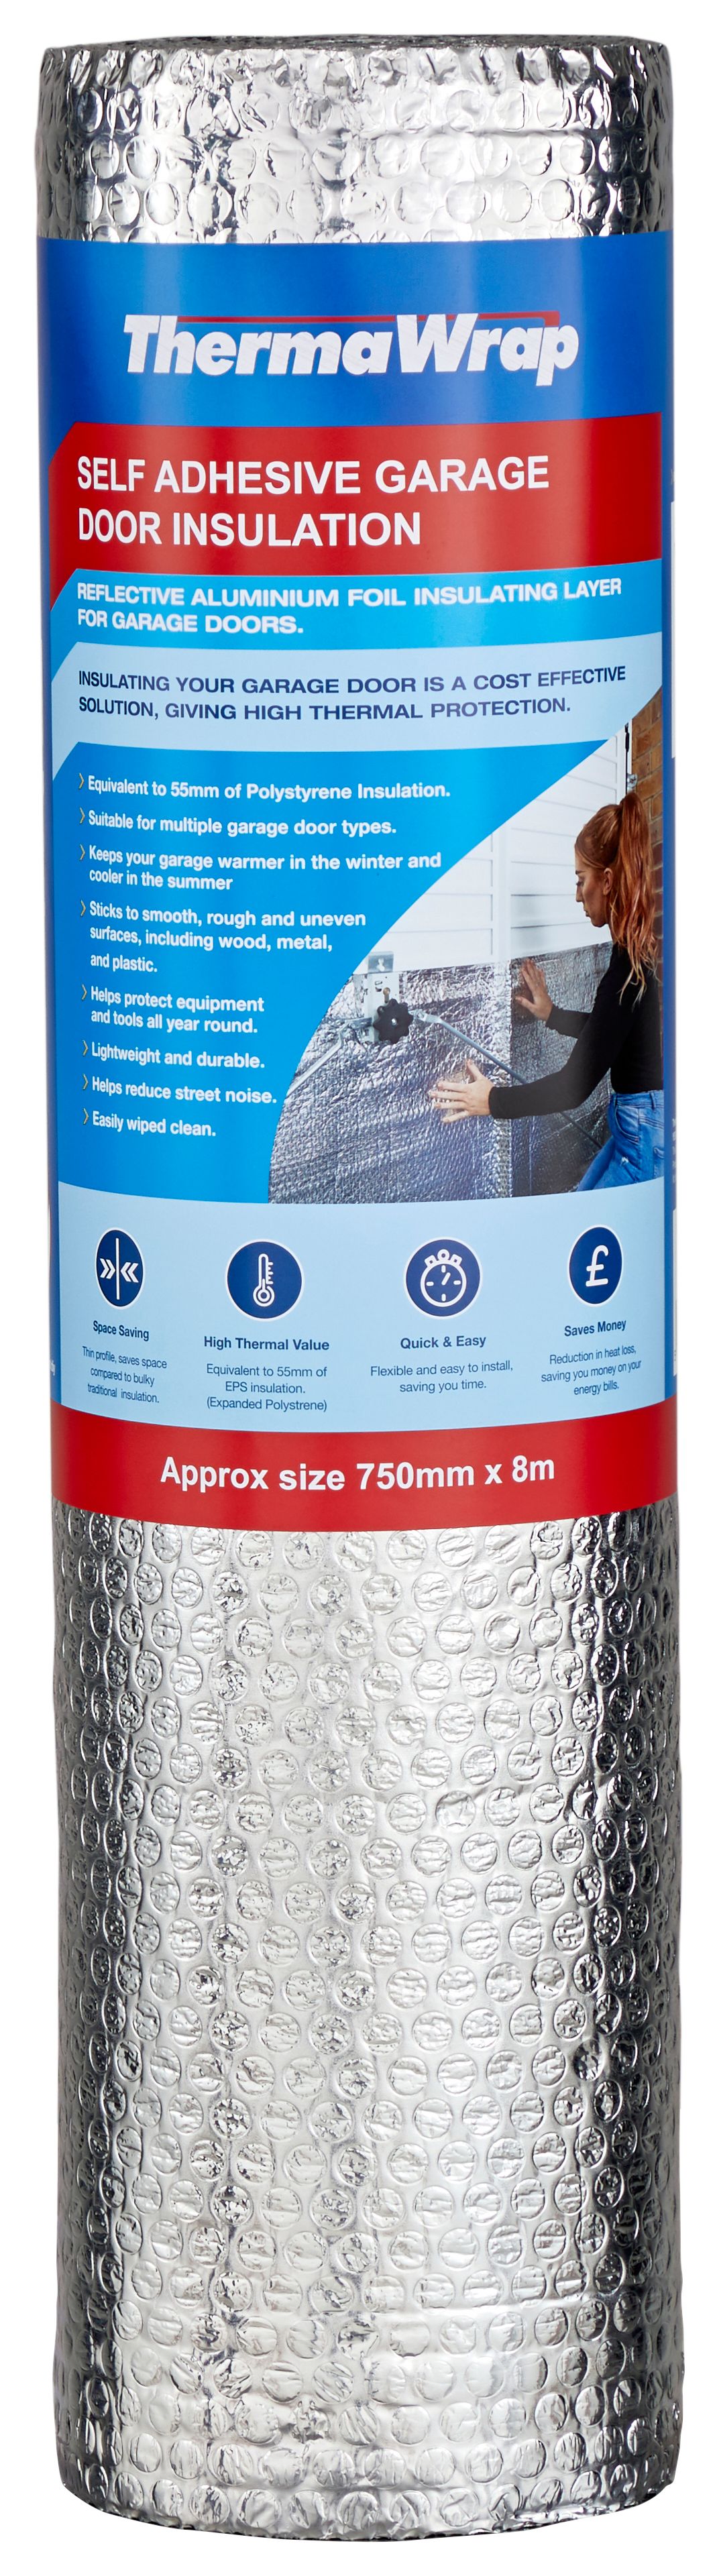 ThermaWrap Self-Adhesive Garage Door Insulation Roll - 750mm x 8m